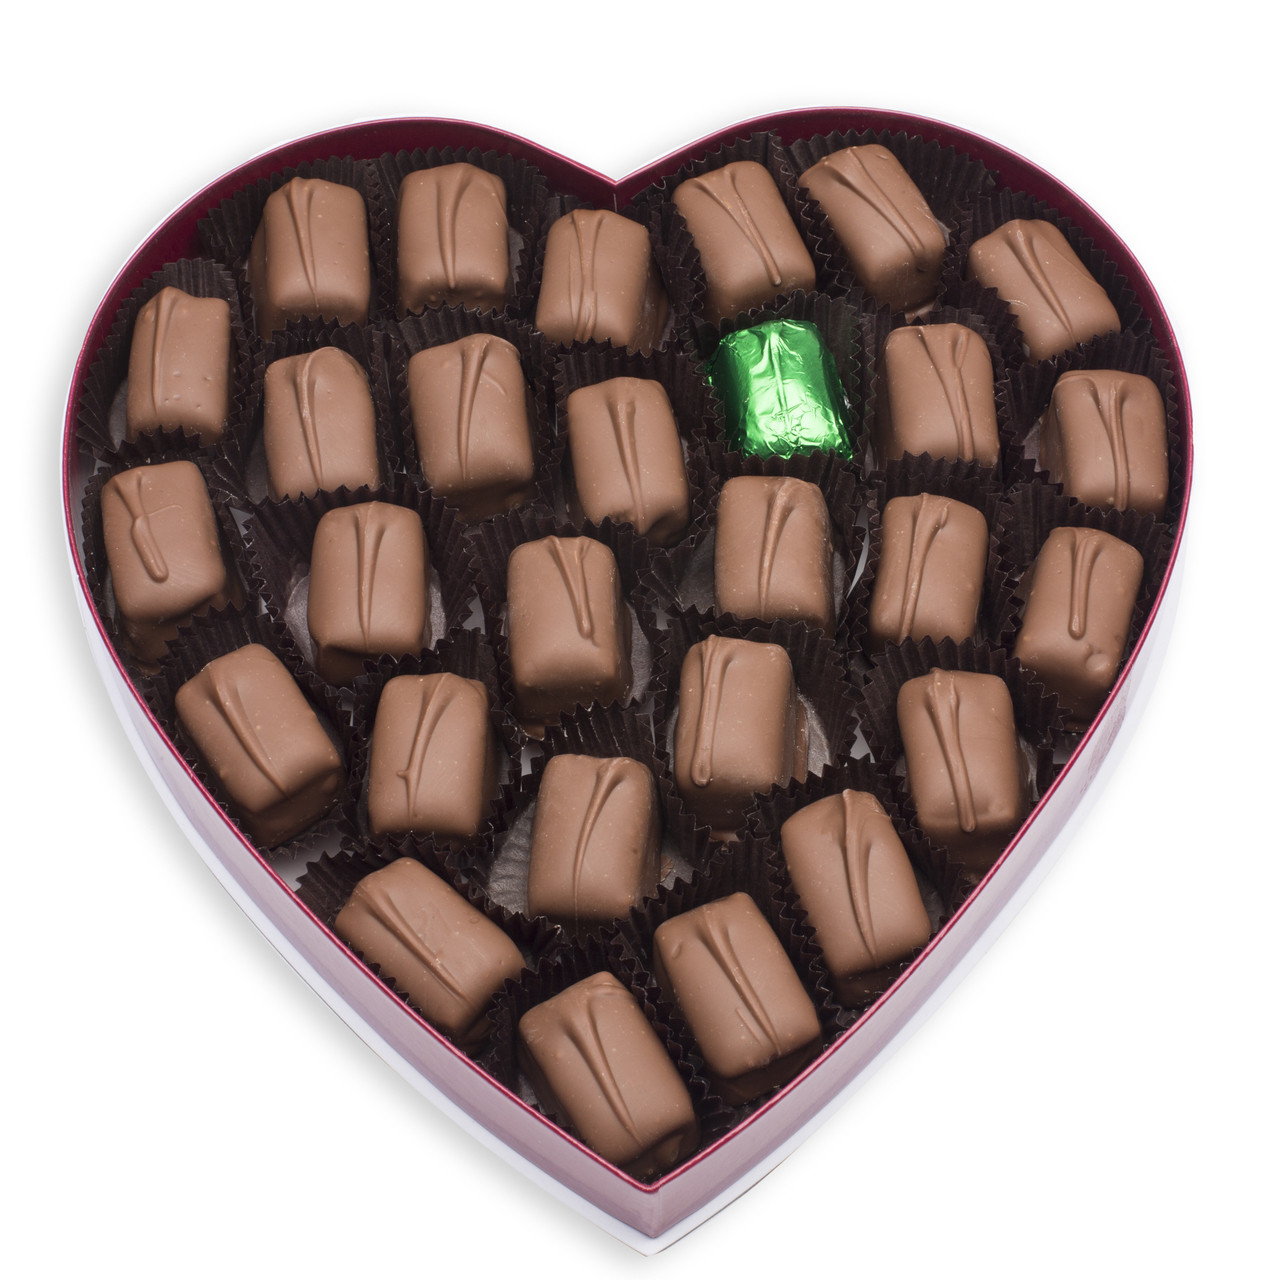 Mindy Mint Truffles in a heart shaped box - 1 lb